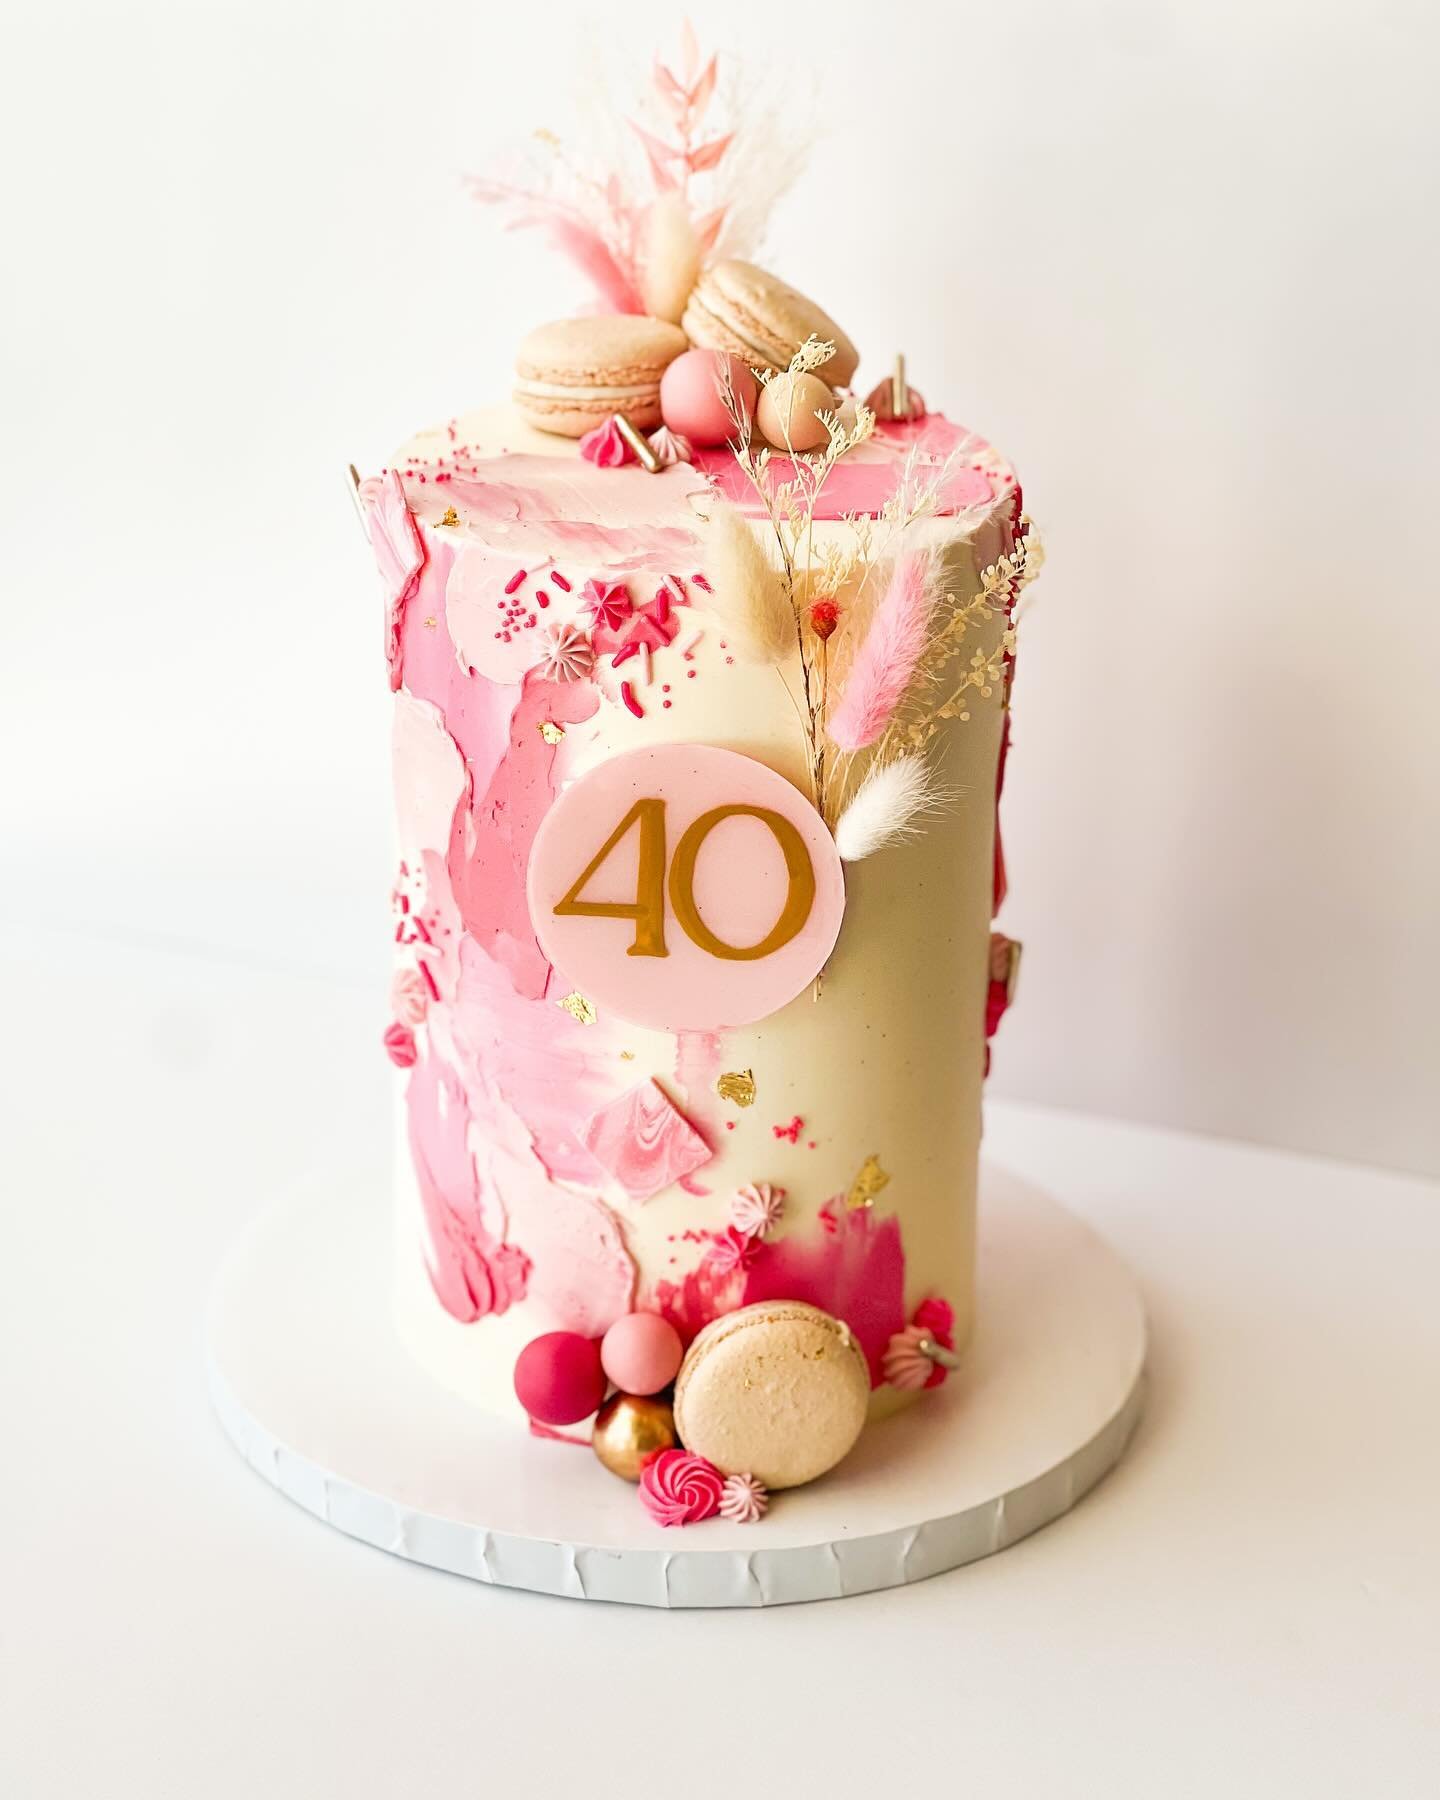 Lordy, Lordy&hellip; 
.
.
.
#Cake #Chocolate #Baking #Birthdaycake #Dessert, #Cakedecorating #Bakery #Cakedesign #slocal #newtimes #ksby #justbaked #marthastewart #macaron #cutecake